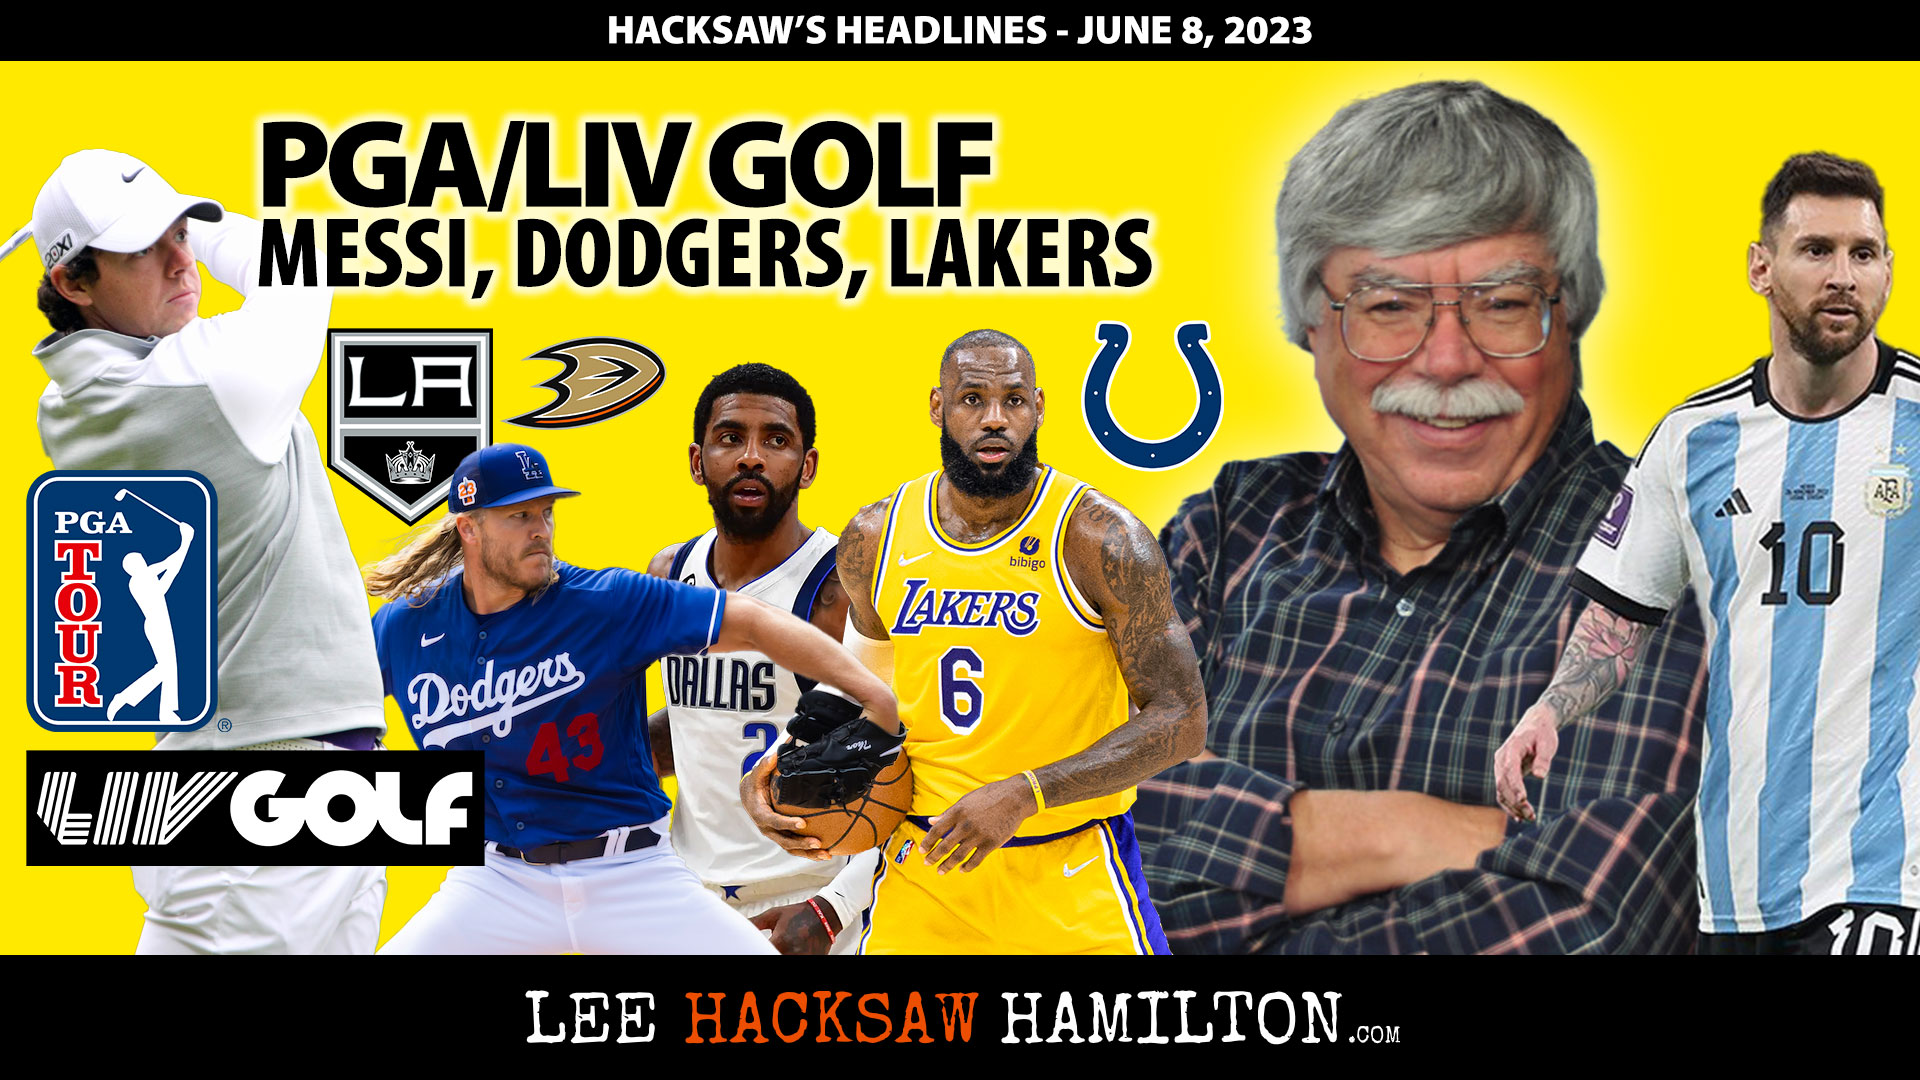 Lee Hacksaw Hamilton discusses PGA/LIV Golf Merger, Messi, Dodgers, Lakers, LeBron James, Kyrie Irving